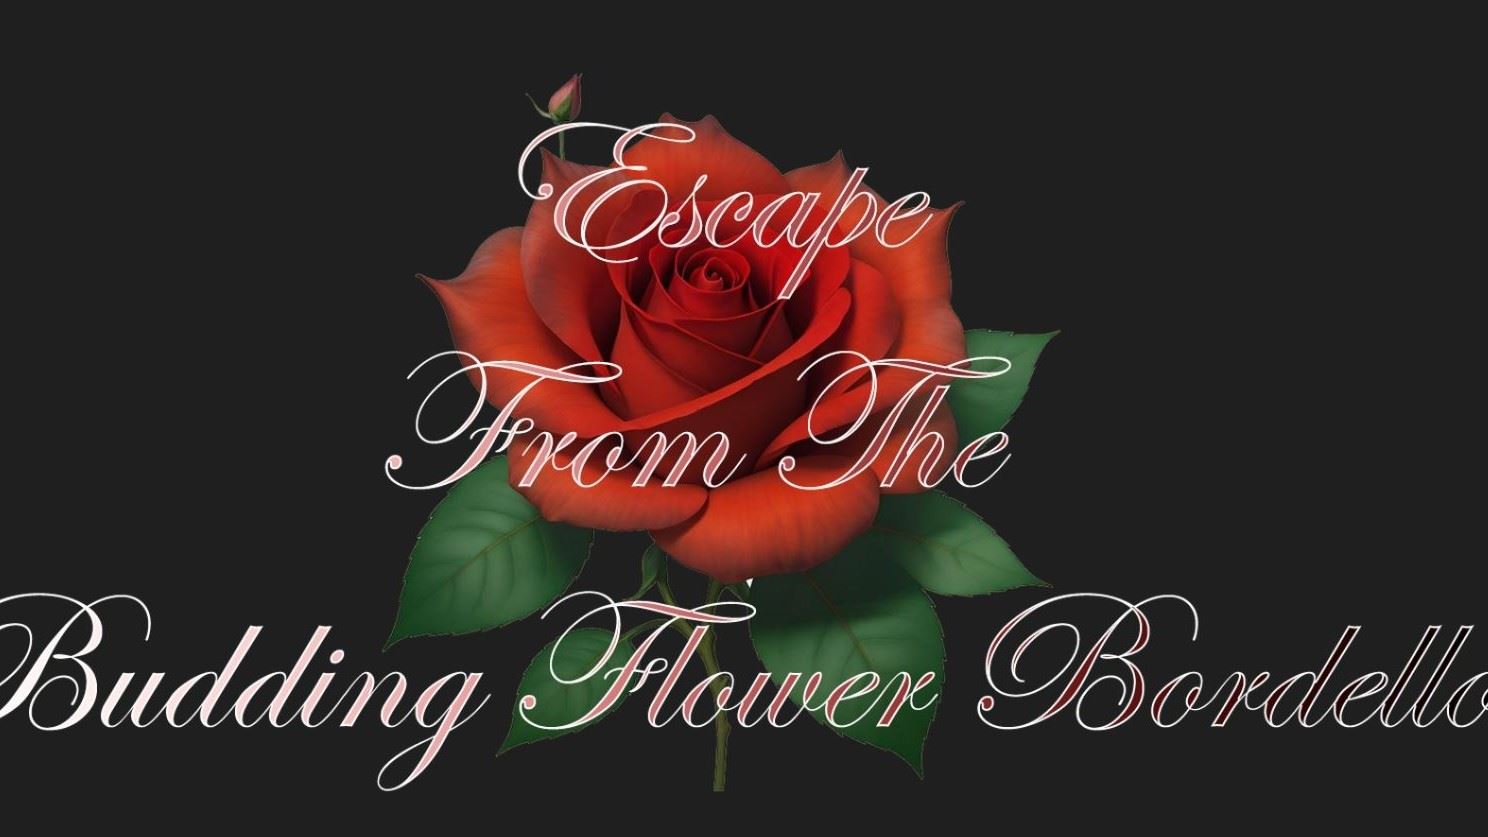 Escape From The Budding Flower Bordello porn xxx game download cover